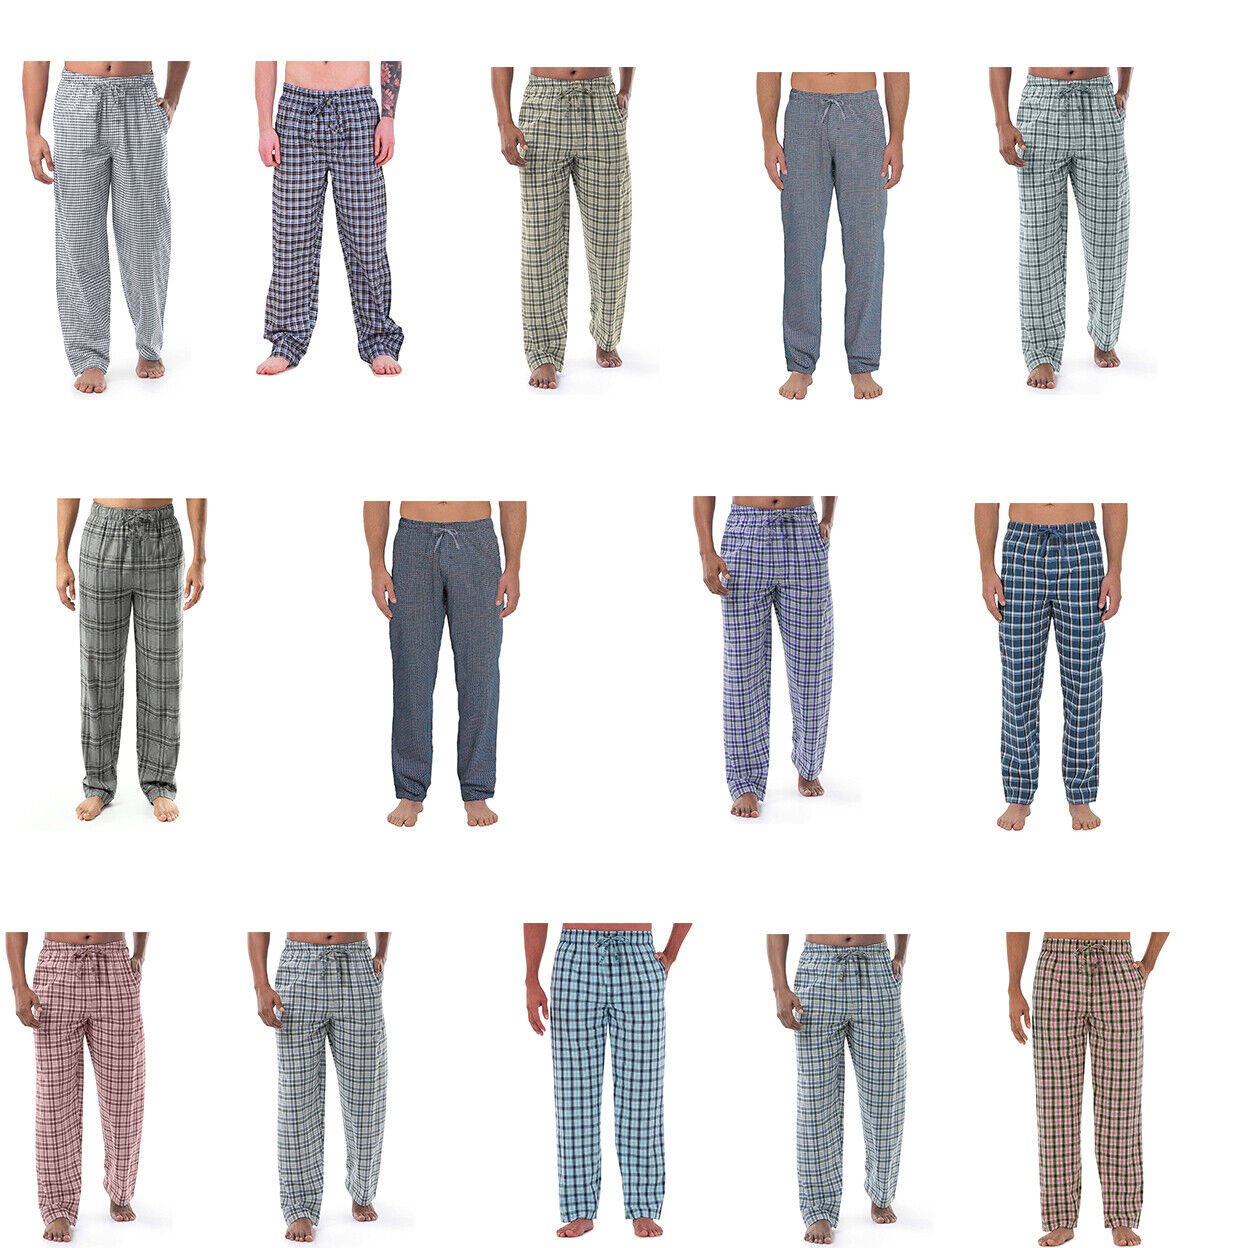 5-Pack: Men's Ultra-Soft Plaid Cotton Jersey Knit Comfy Sleep Lounge Pajama Pants - X-large